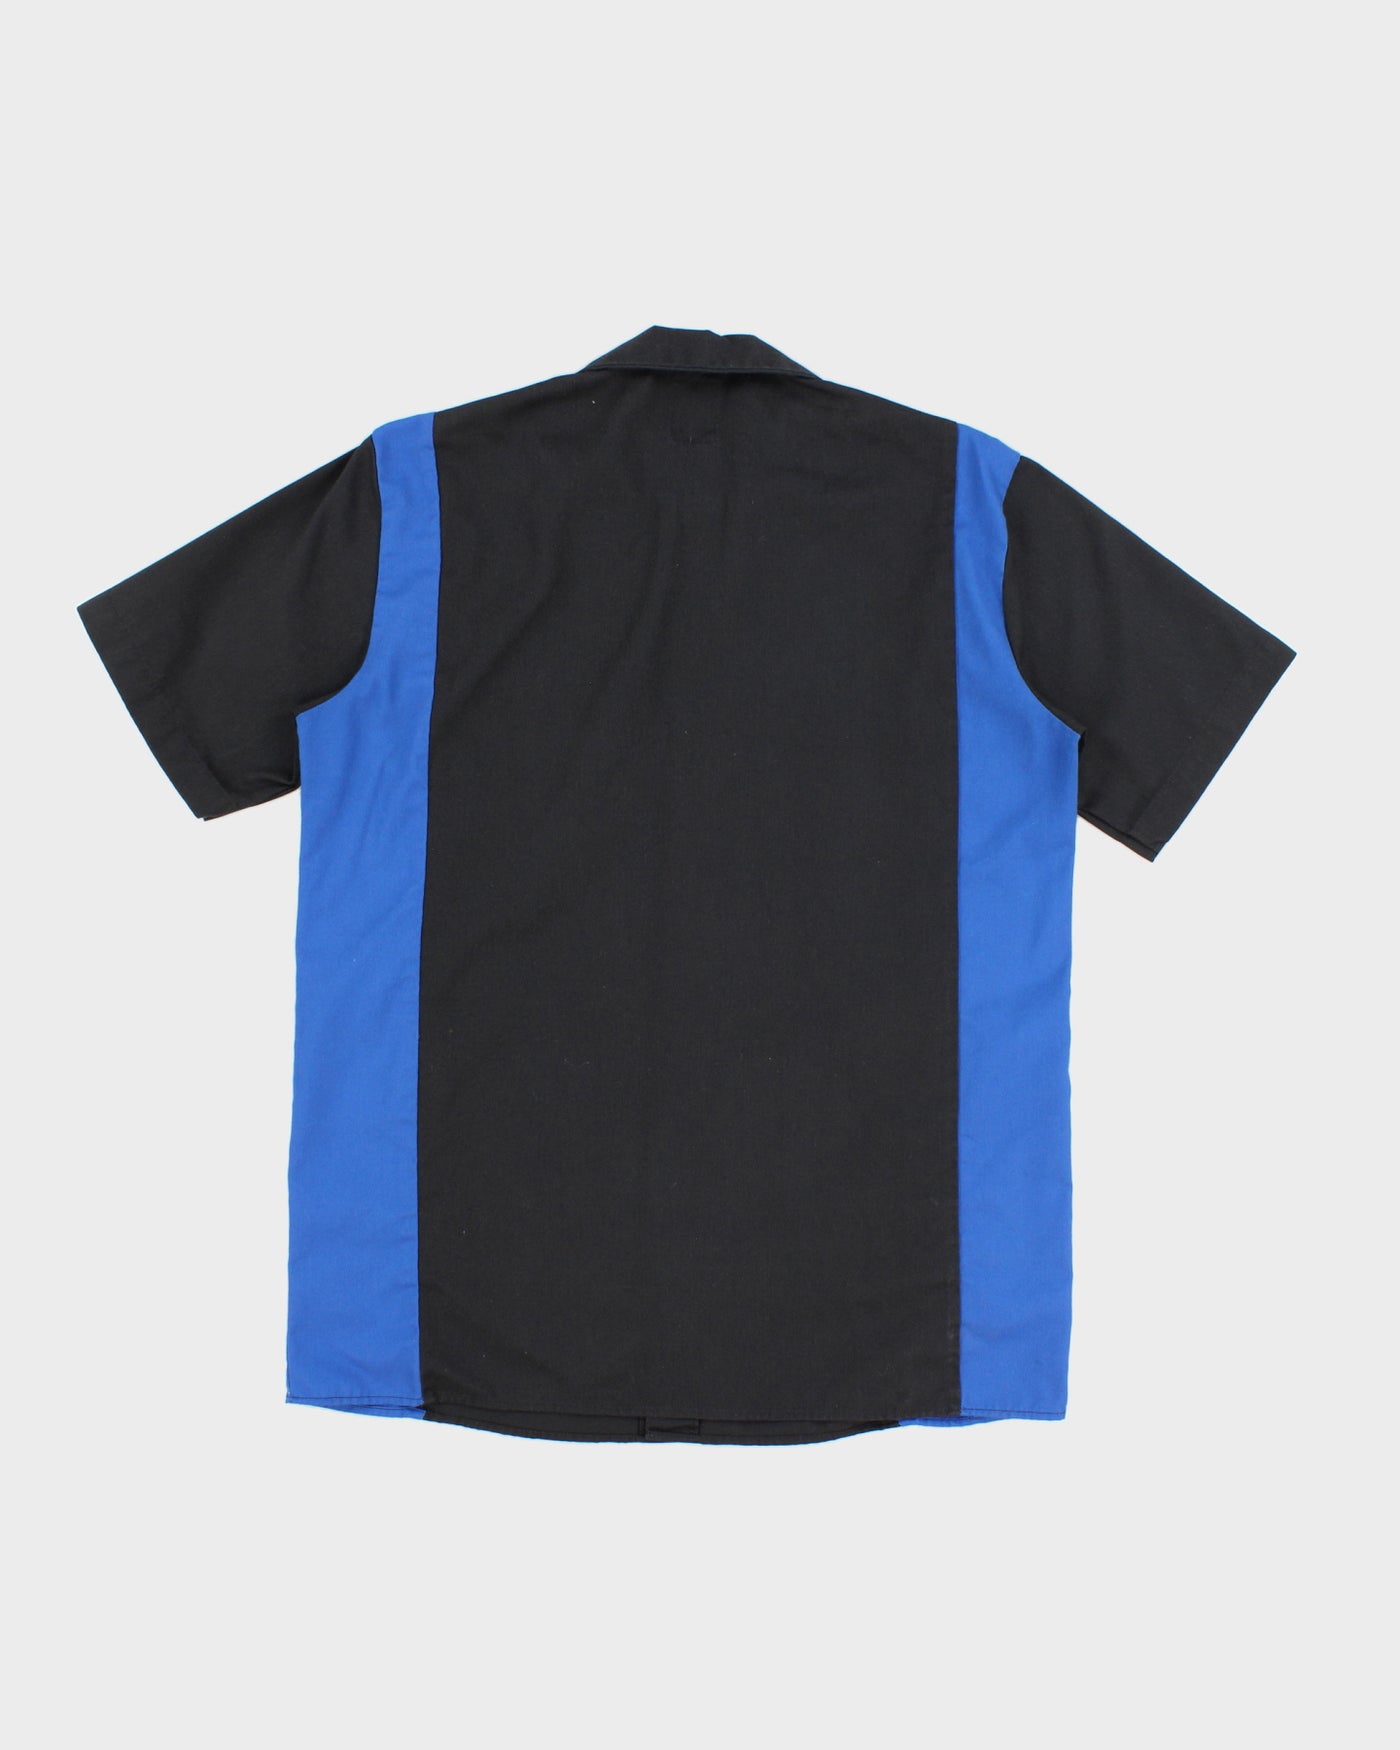 Dickies Mens Black & Blue Bowling Shirt - L